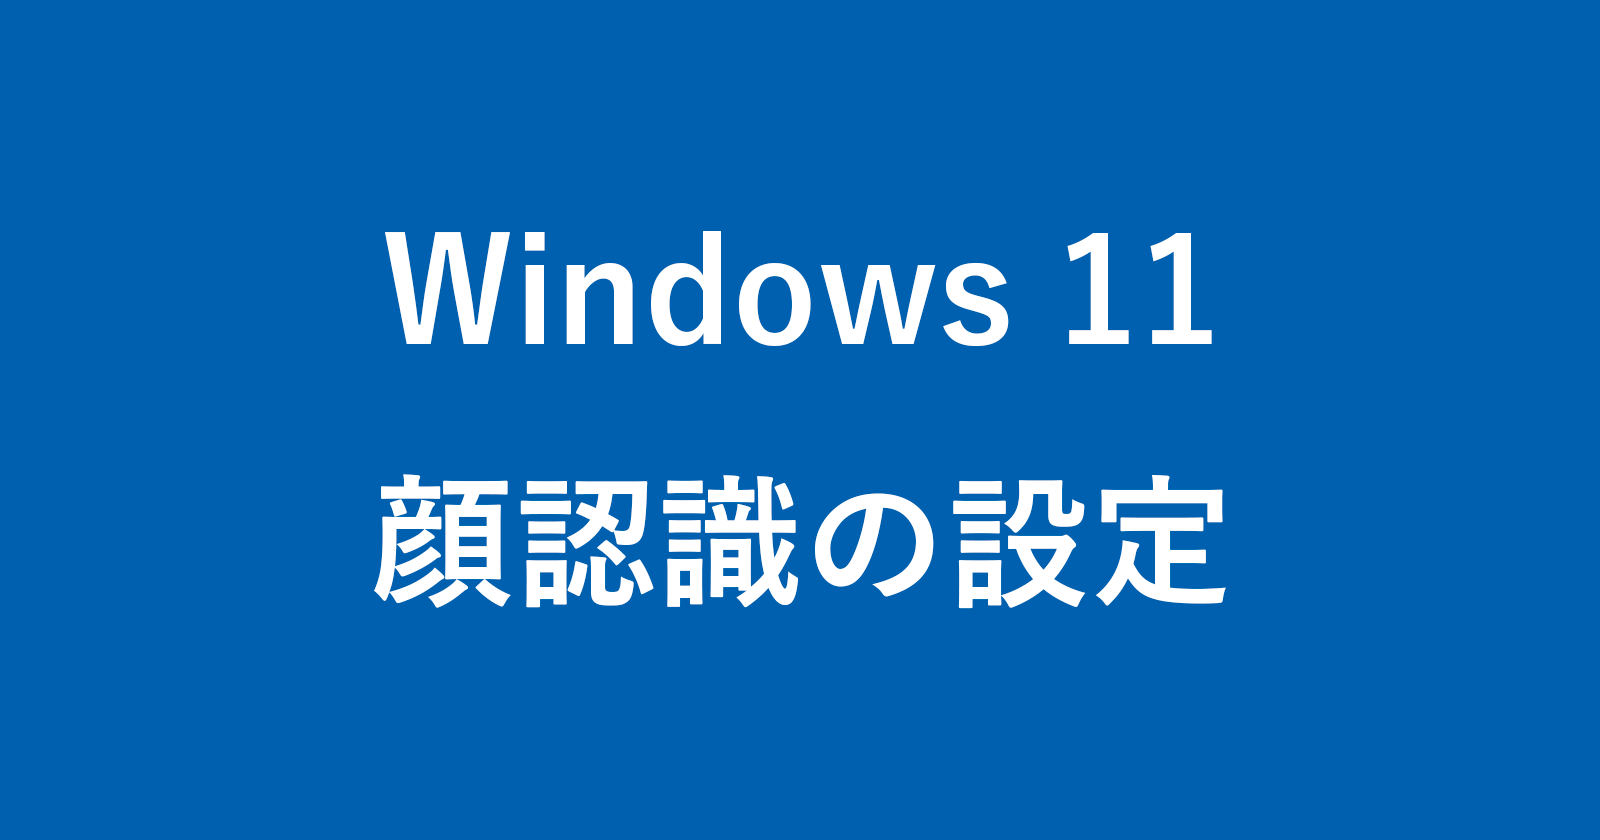 windows 11 hello